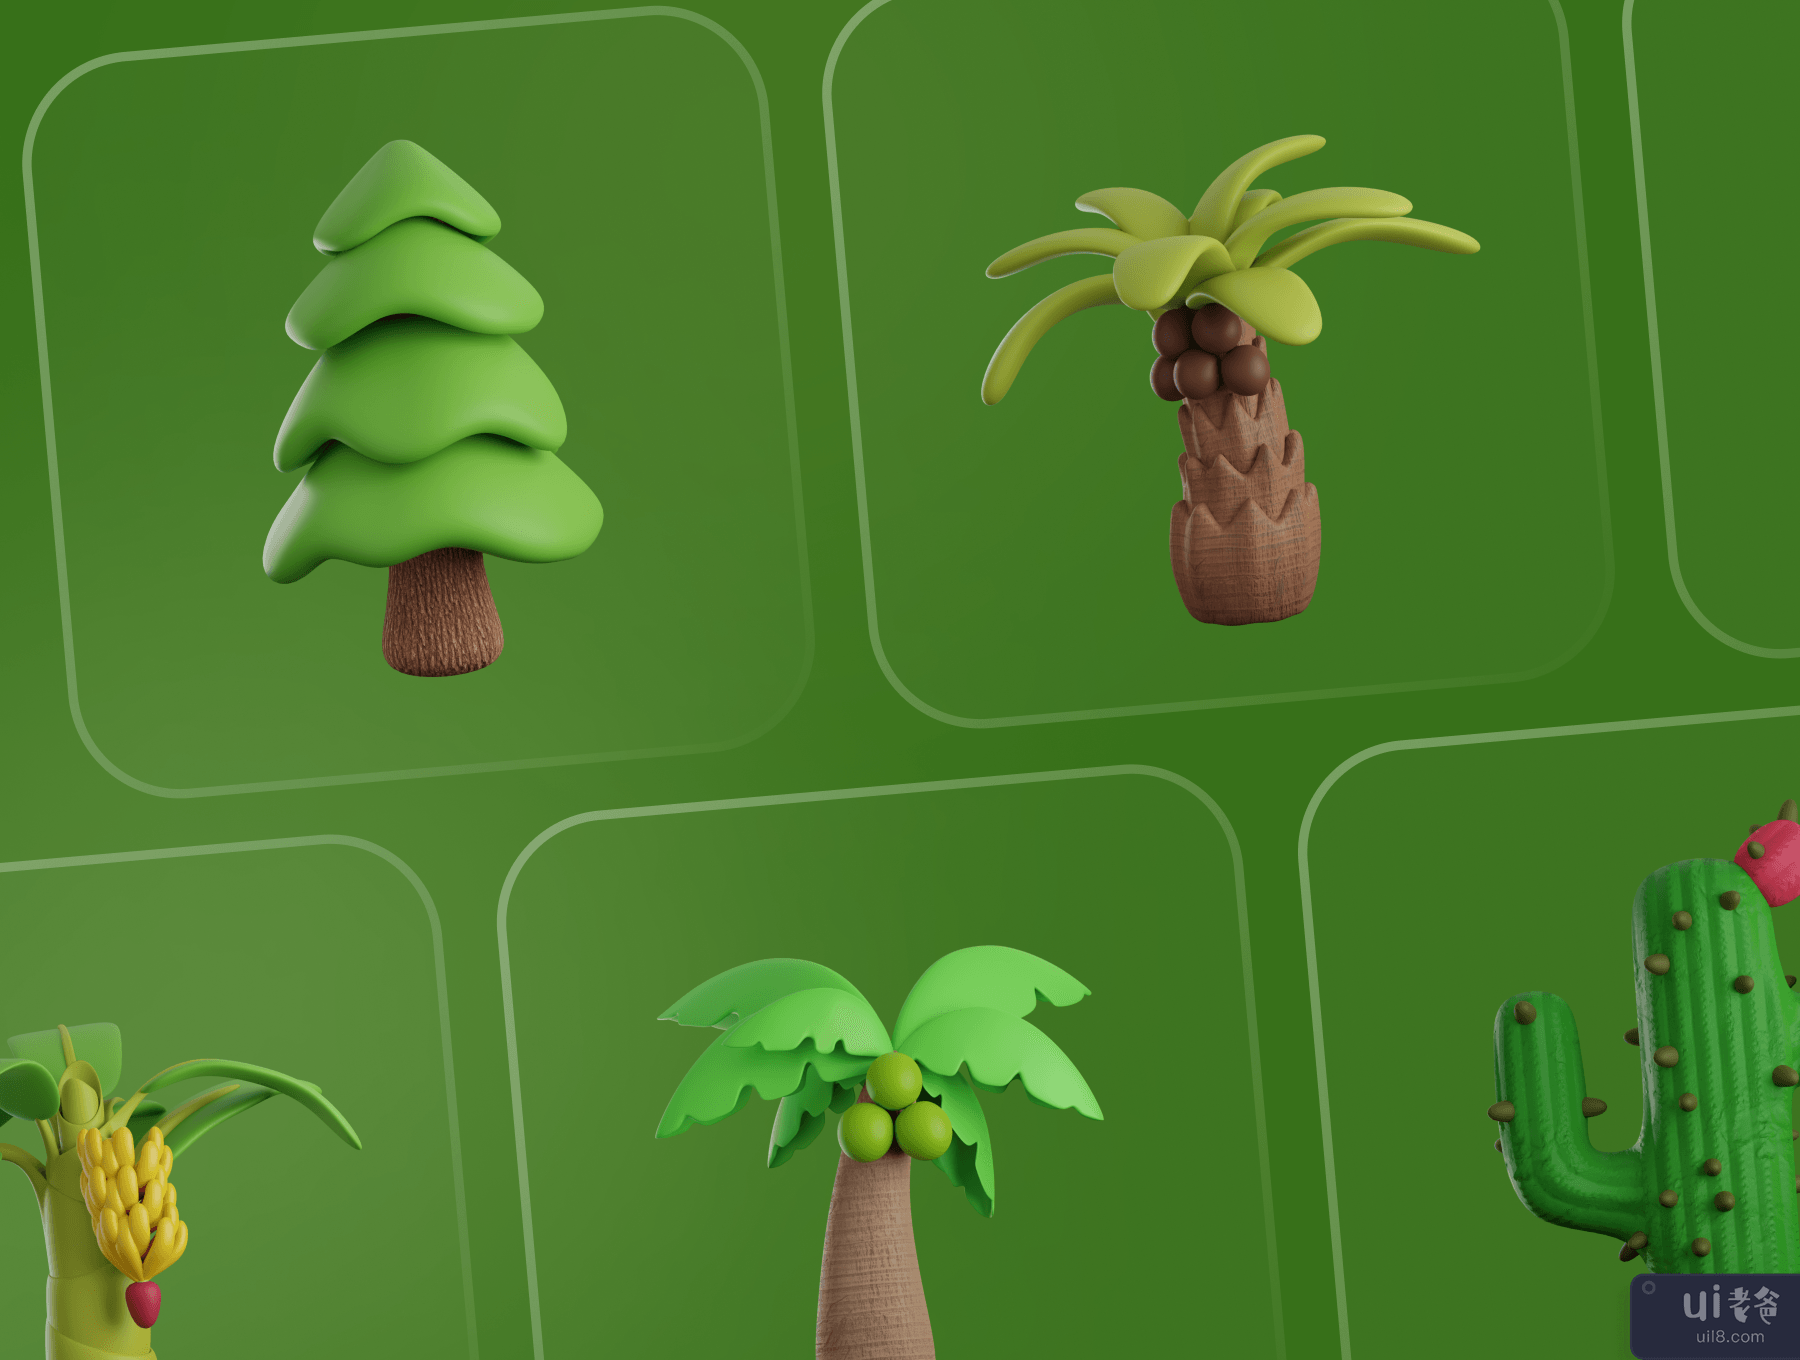 Treeby - 树和植物 3D 图标集 (Treeby - Tree & Plant 3D Icon Set)插图1